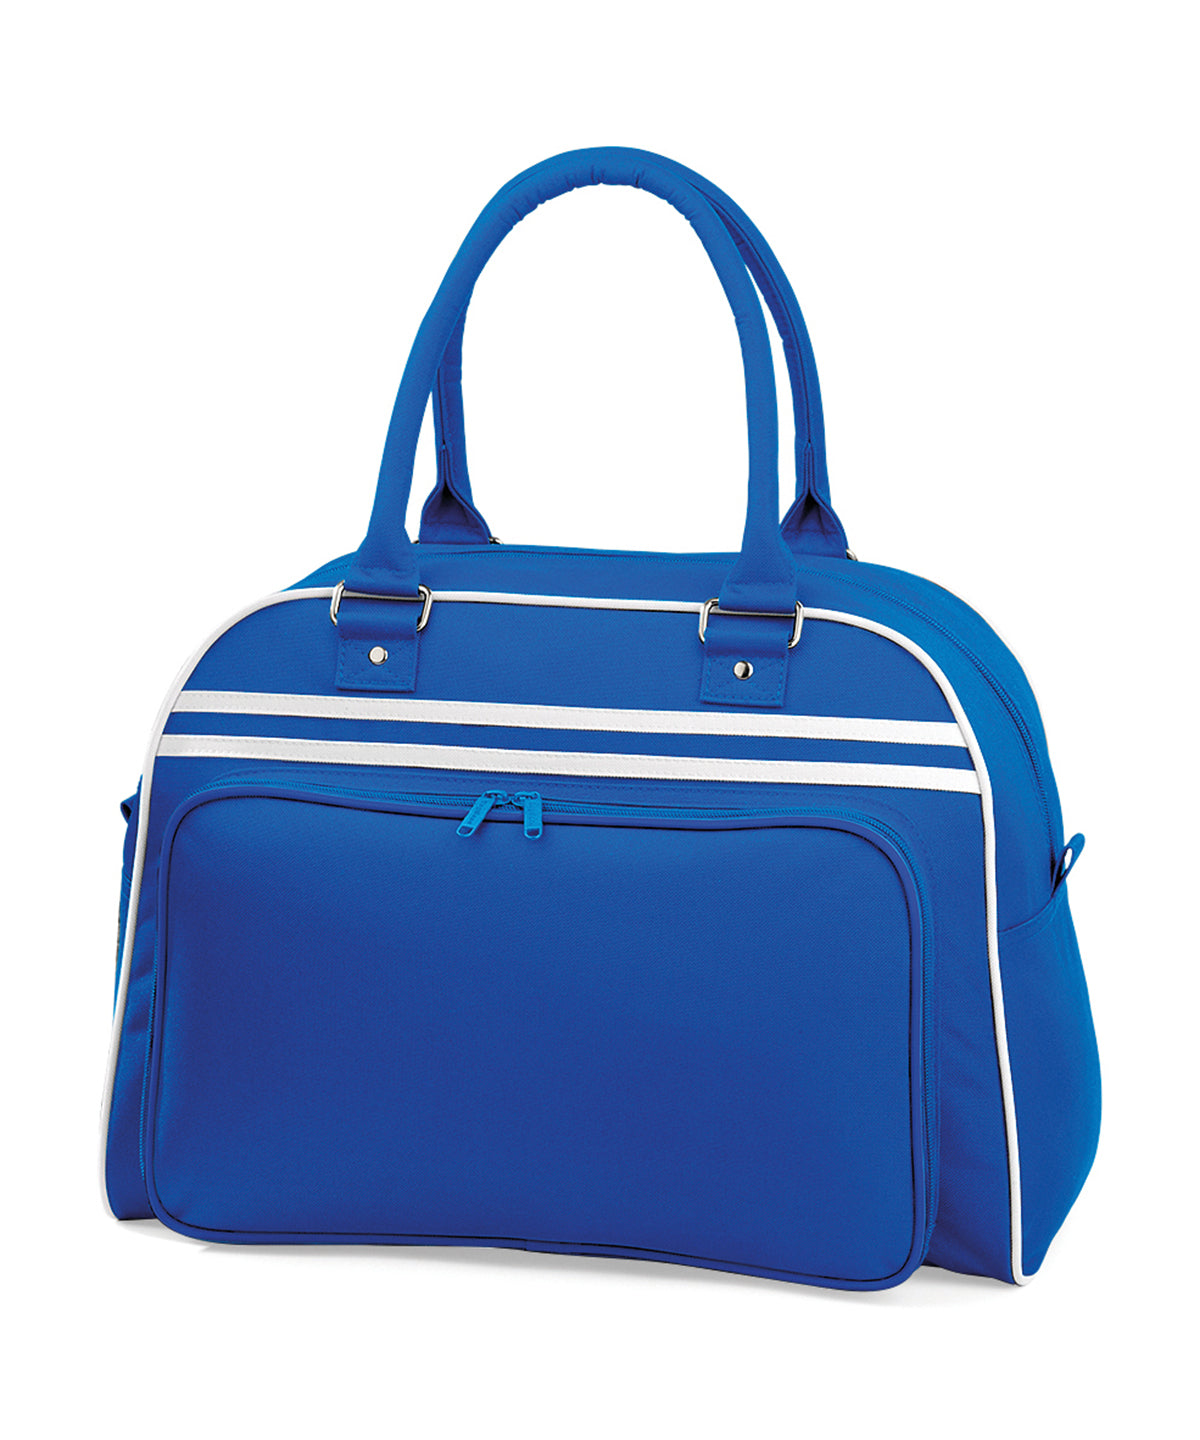 Personalised Bags - Royal Bagbase Retro bowling bag